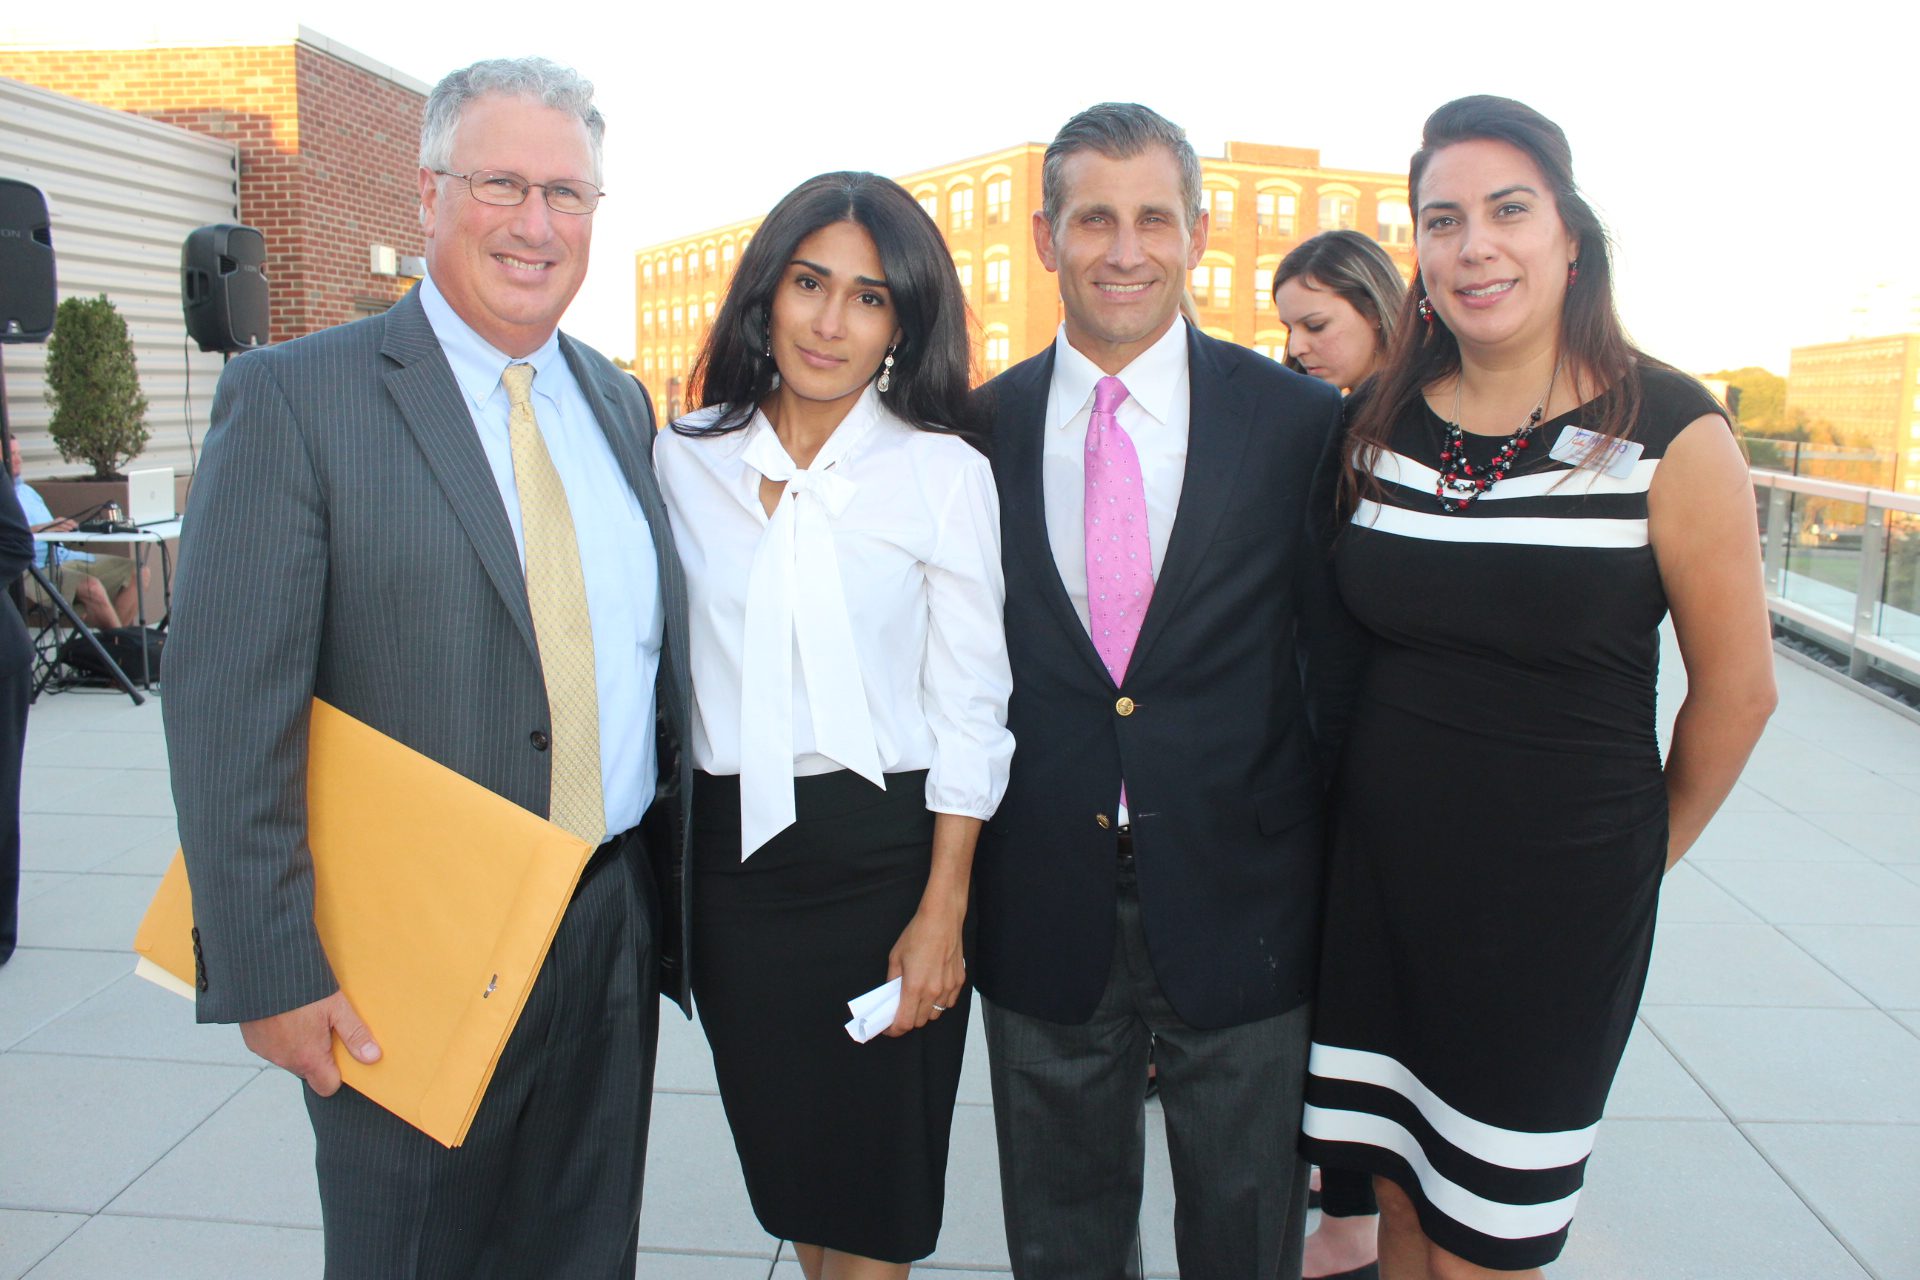 Mayor Thomas McGee, Saritin Rizzuto, Taso Nikolakopoulos, and Diana Moreno.